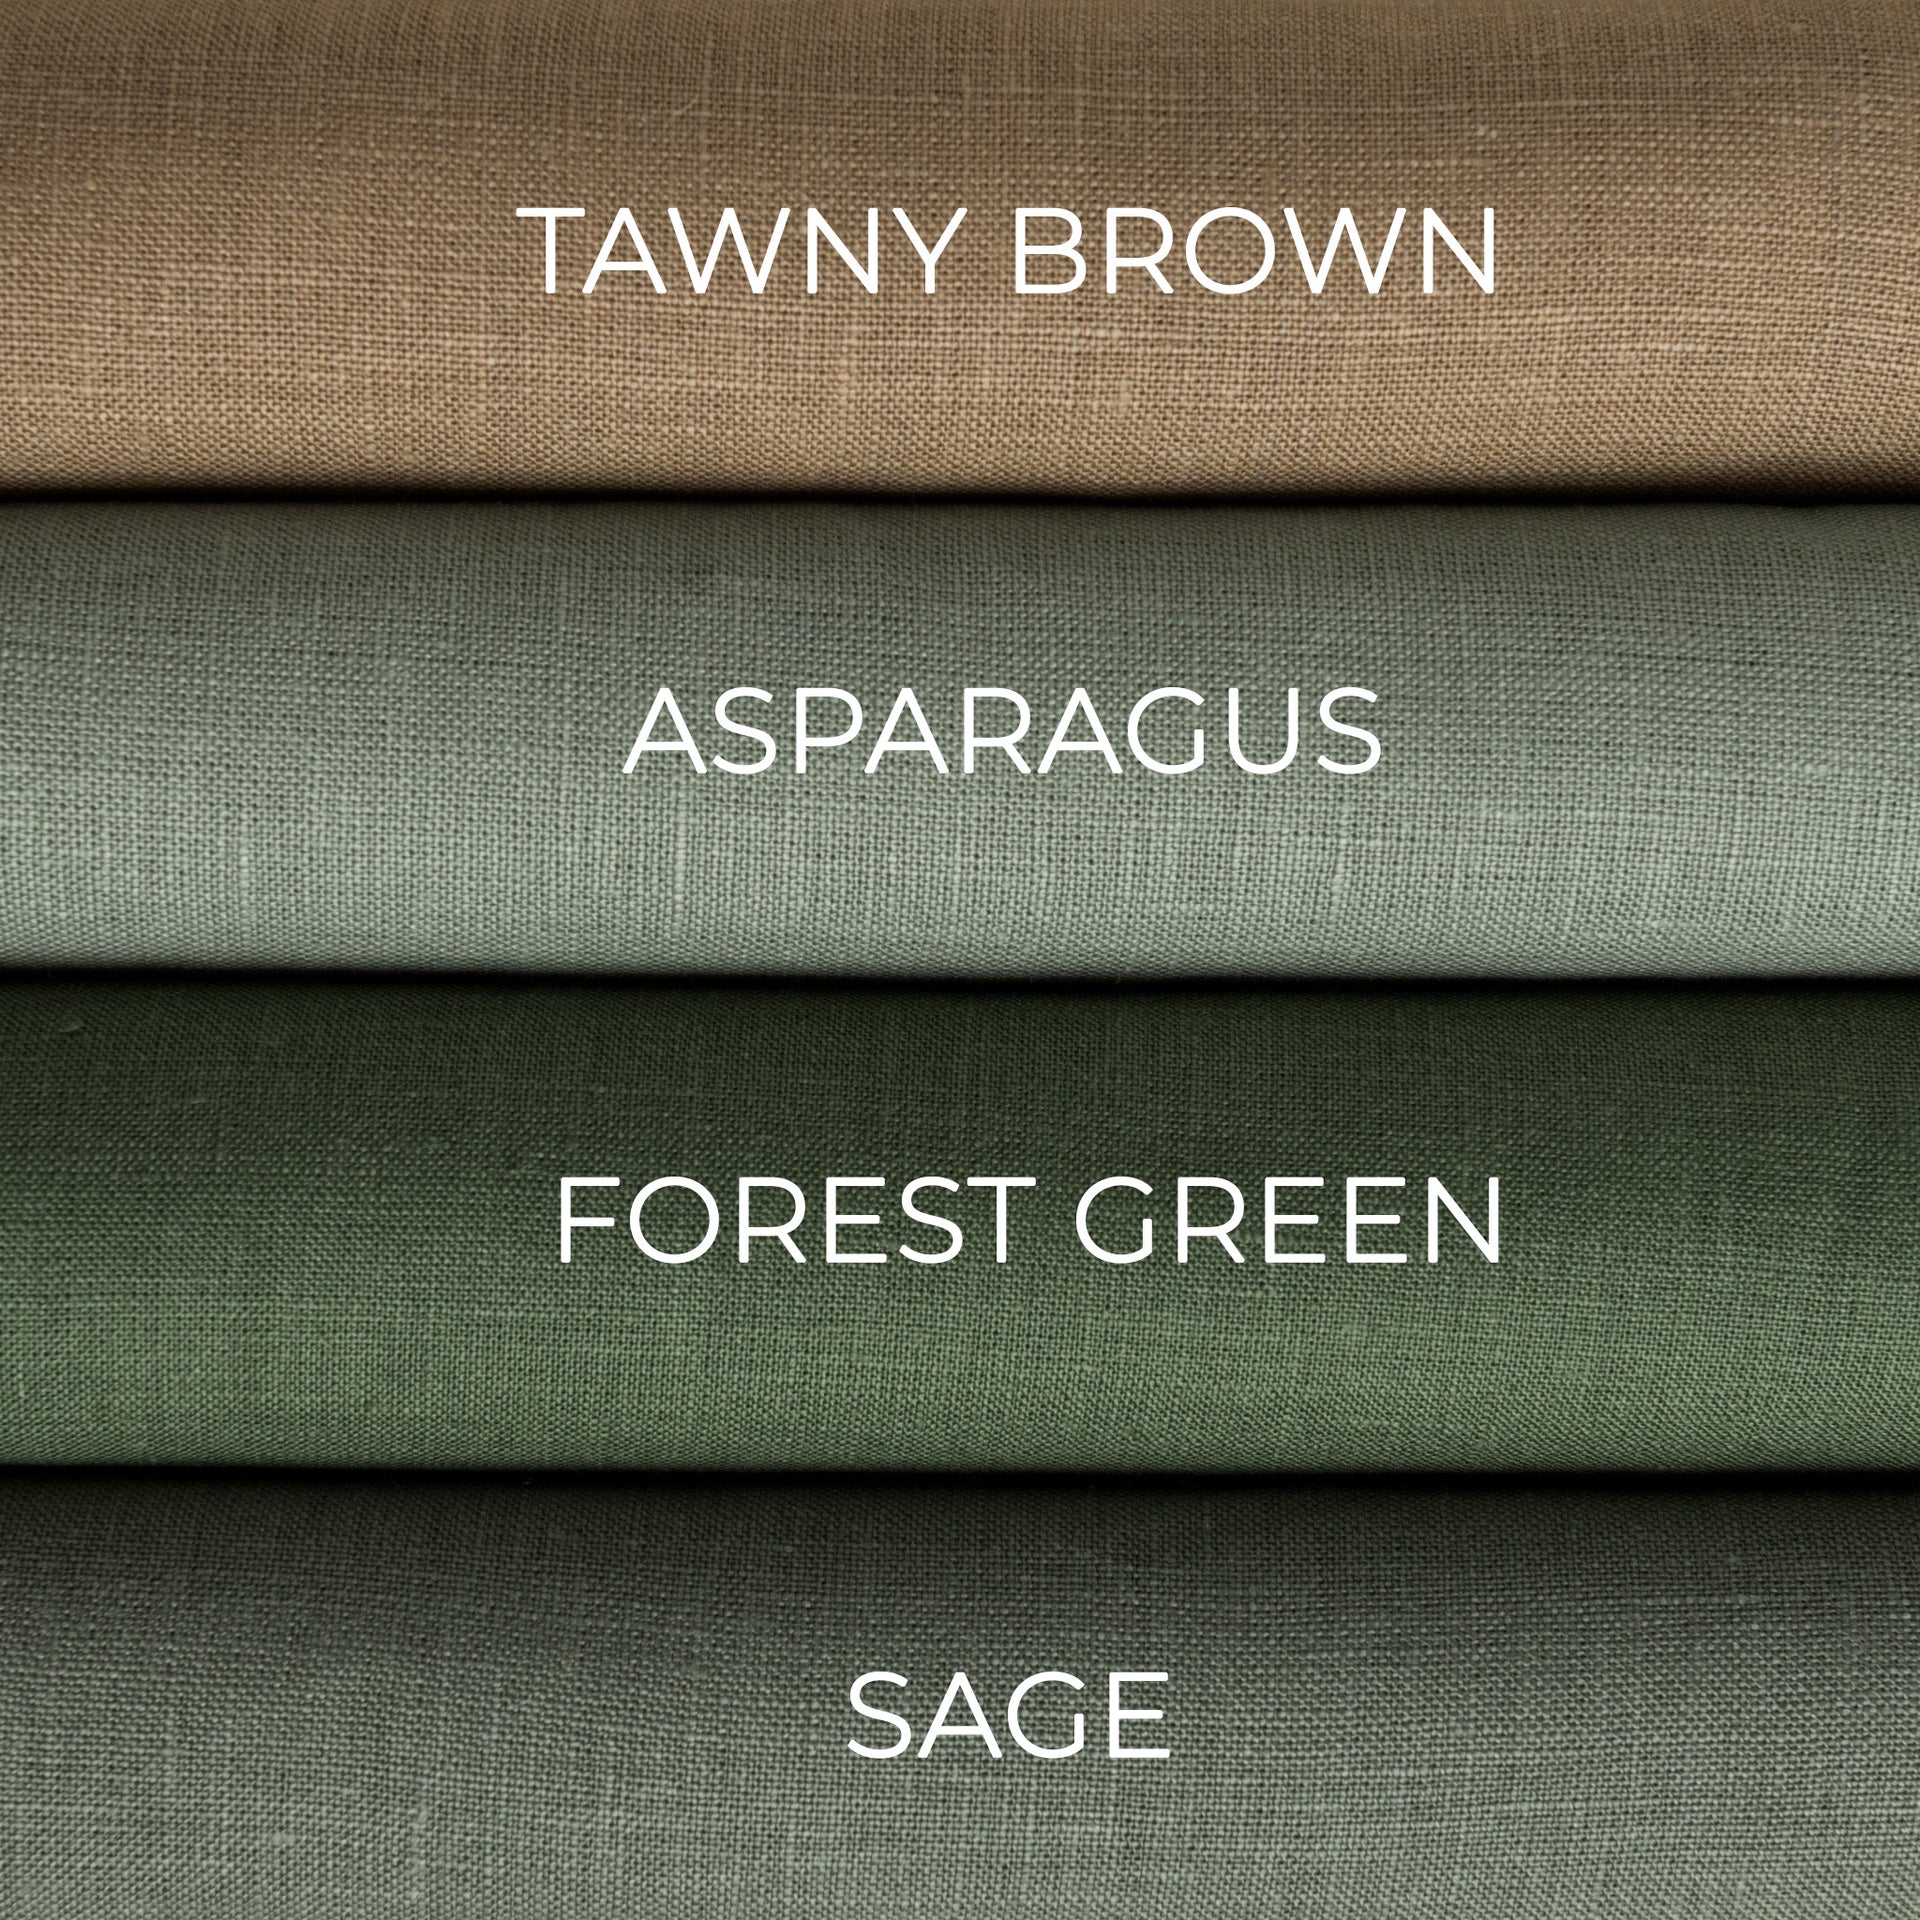 @color:Tawny Brown,color:Asparagus, color:Forest Green, color:Sage